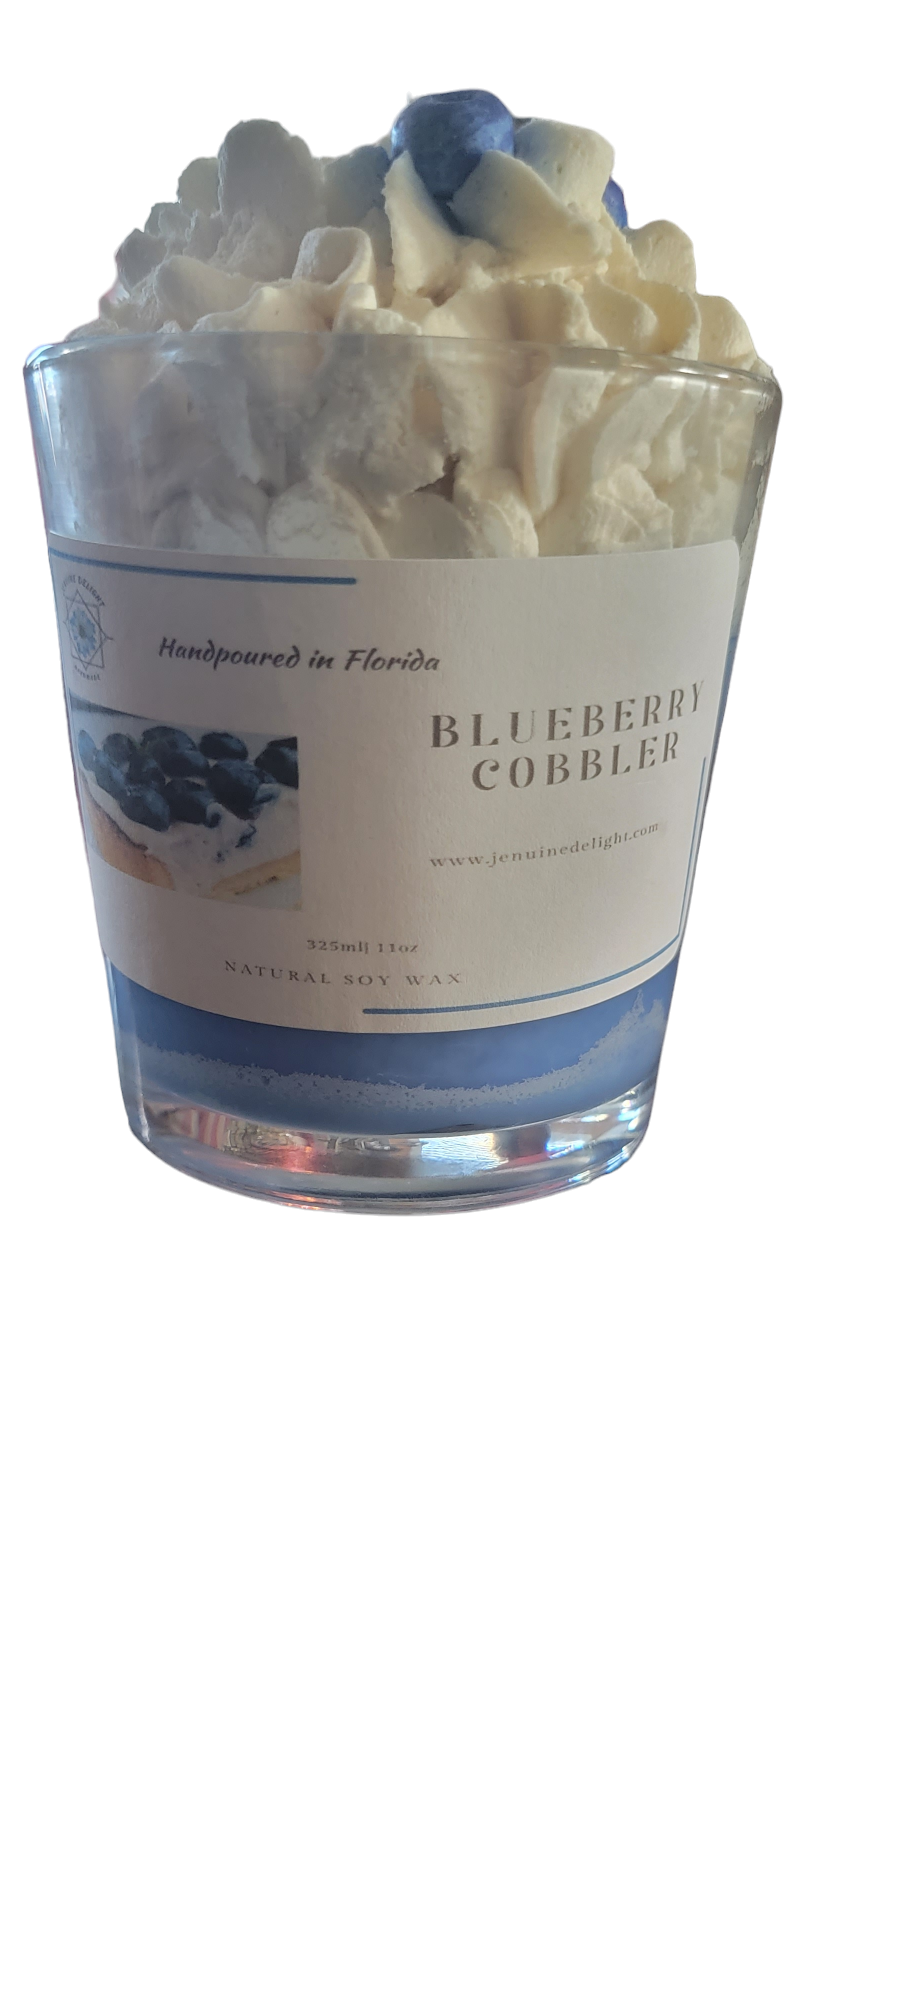 Blueberry cobbler 11 ozs Candle